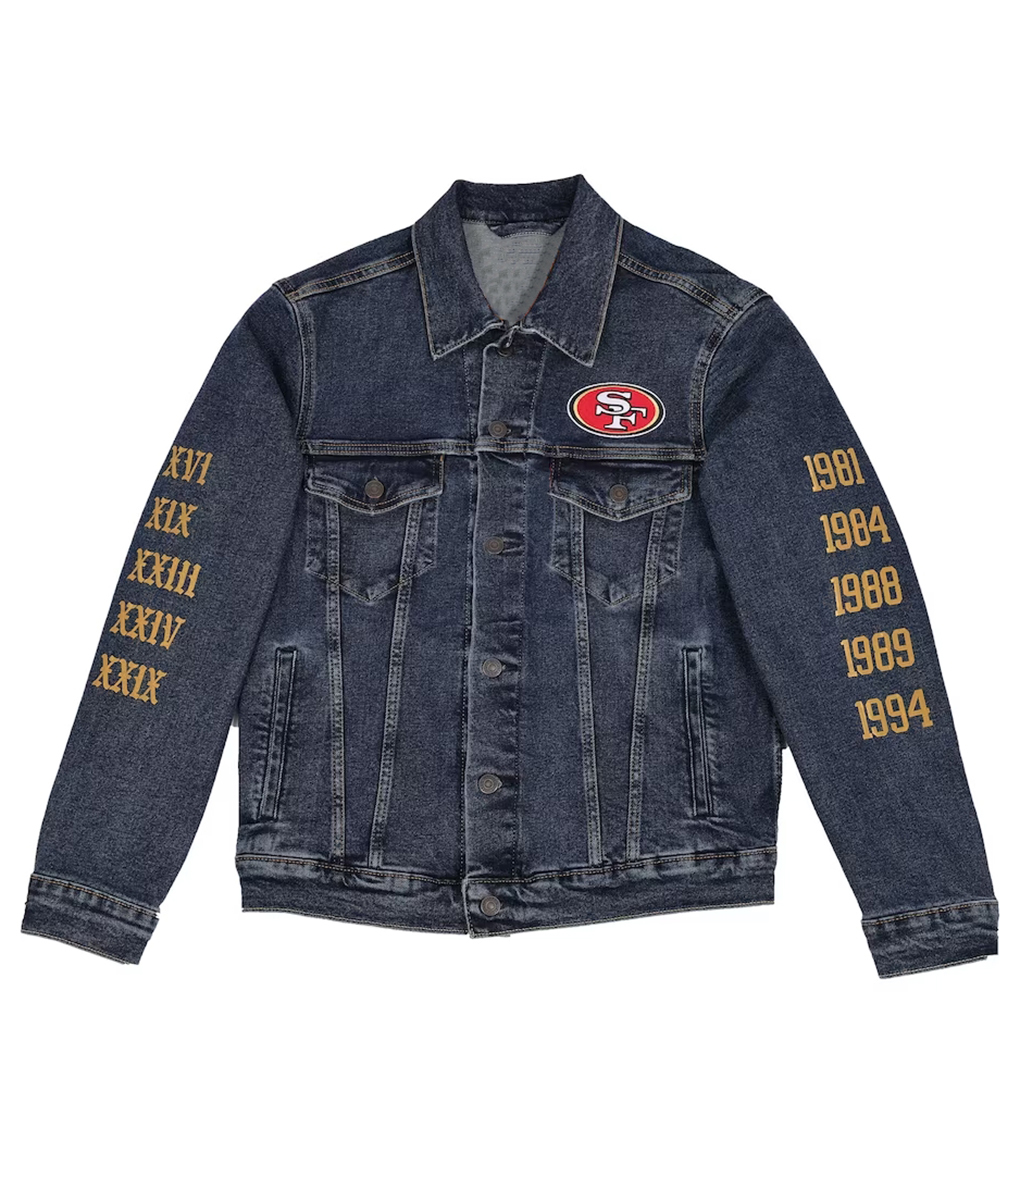 SF 49ers Faithful To The Bay Blue Denim Jacket (2)